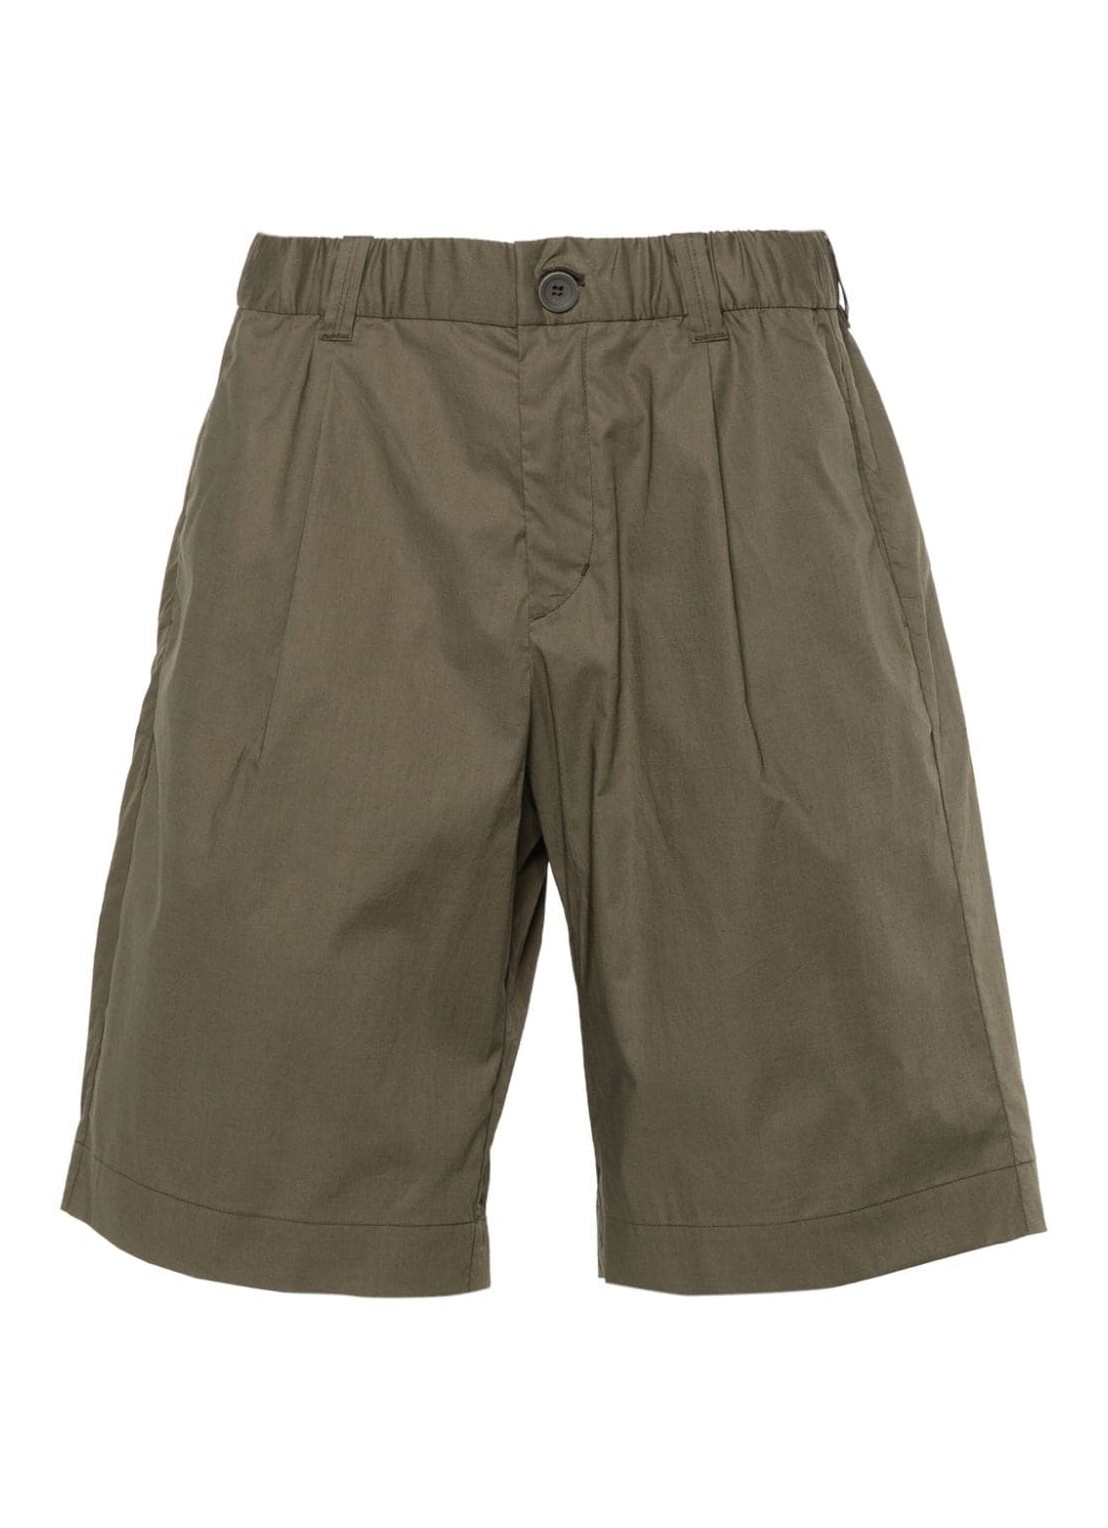 Pantalon corto herno short pant manlight cotton stretch  ultralight cr - pt000029u13164 7730 talla M